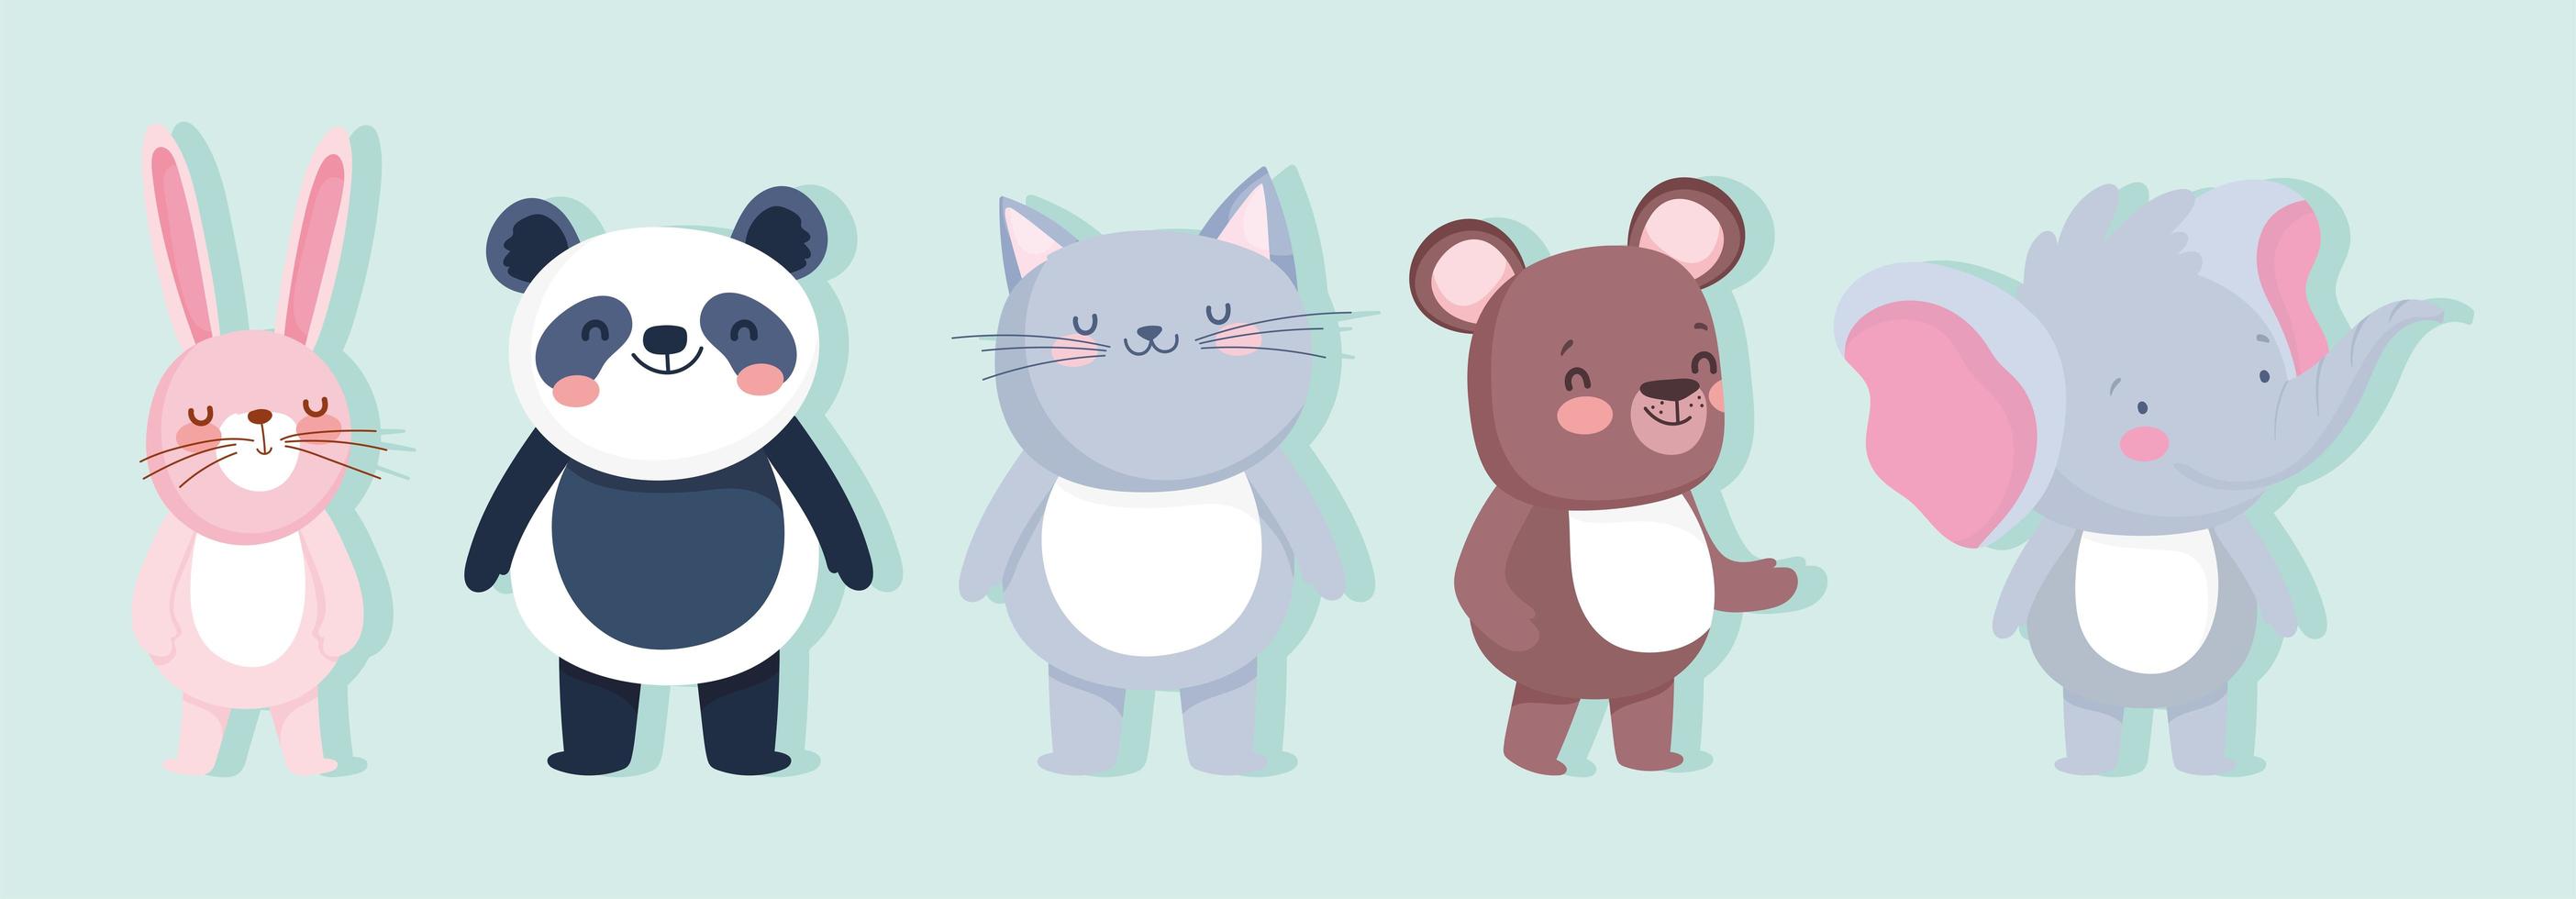 Cute animal characters set vector